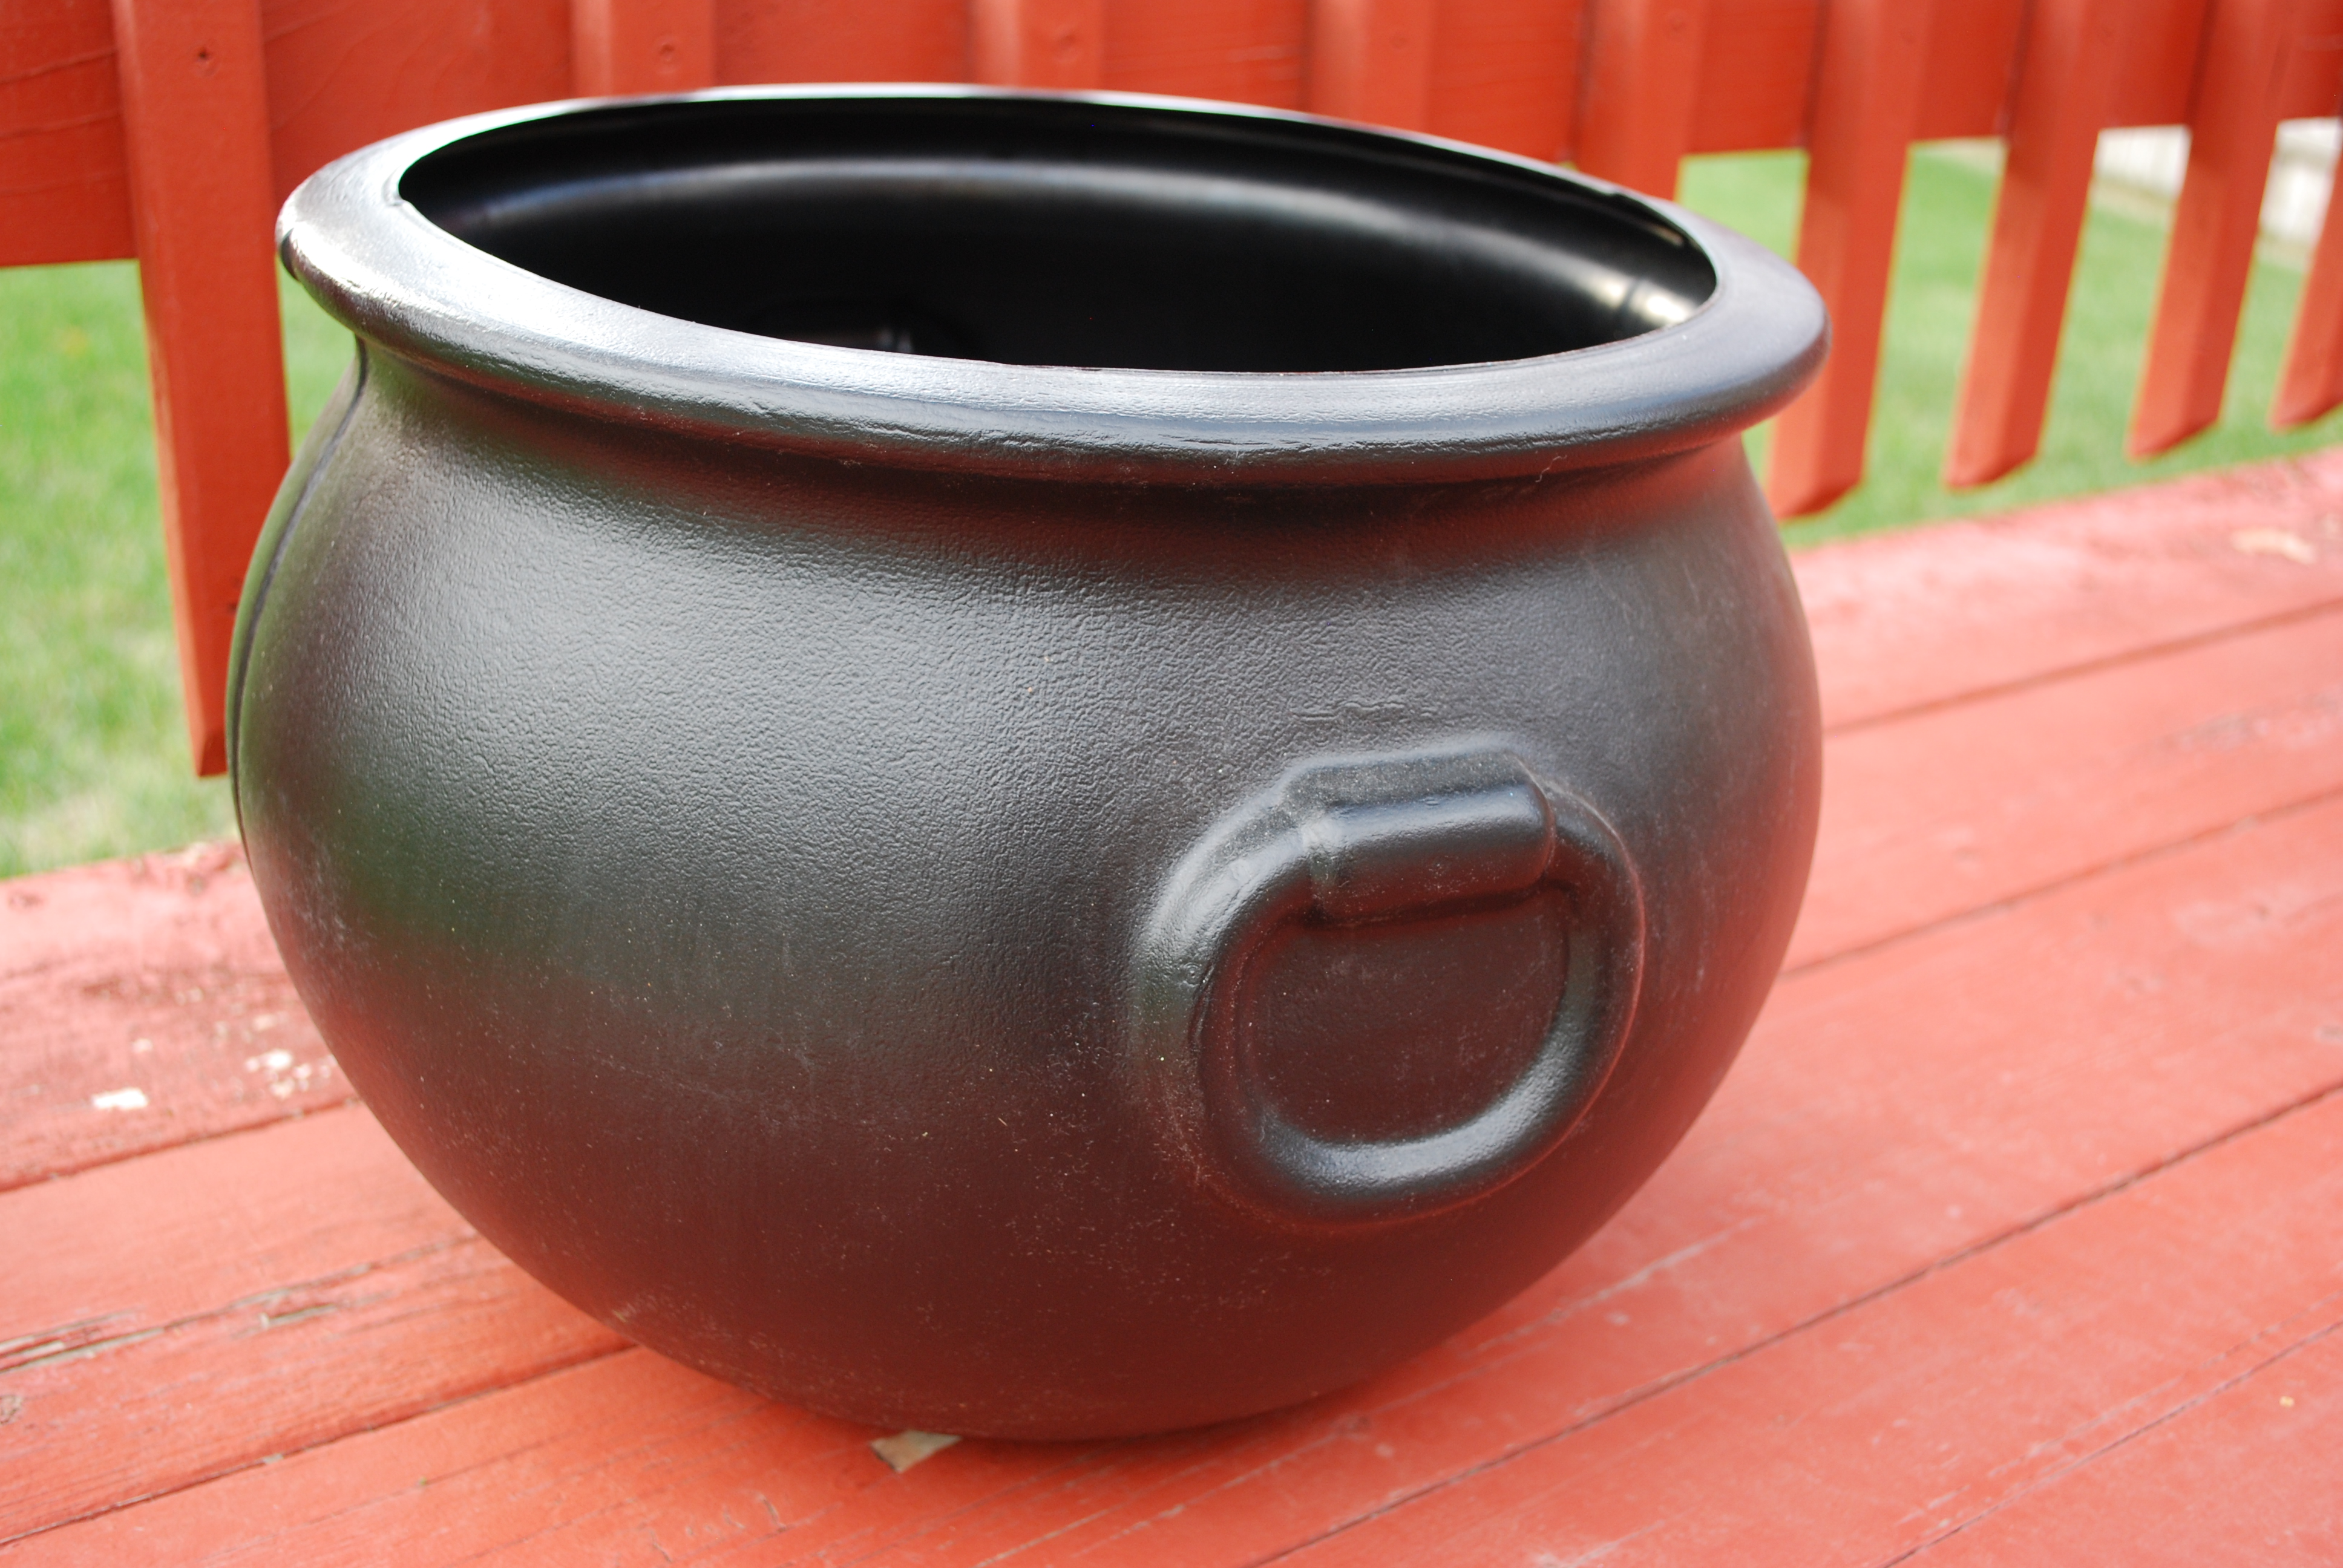 Improving a cheap plastic cauldron